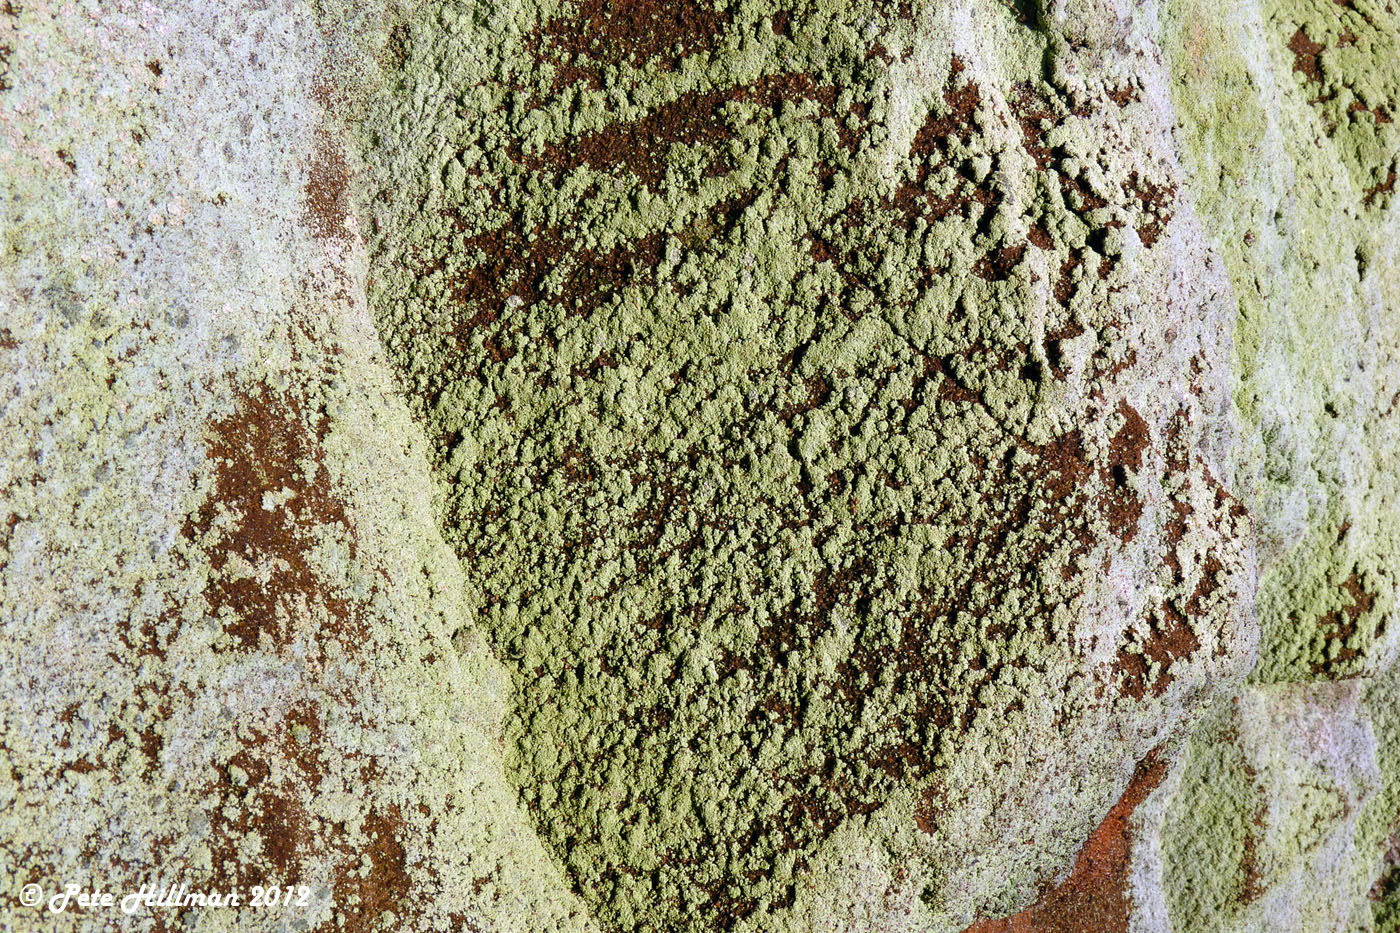 Sulphur Dust Lichen (Psilolechia lucida)